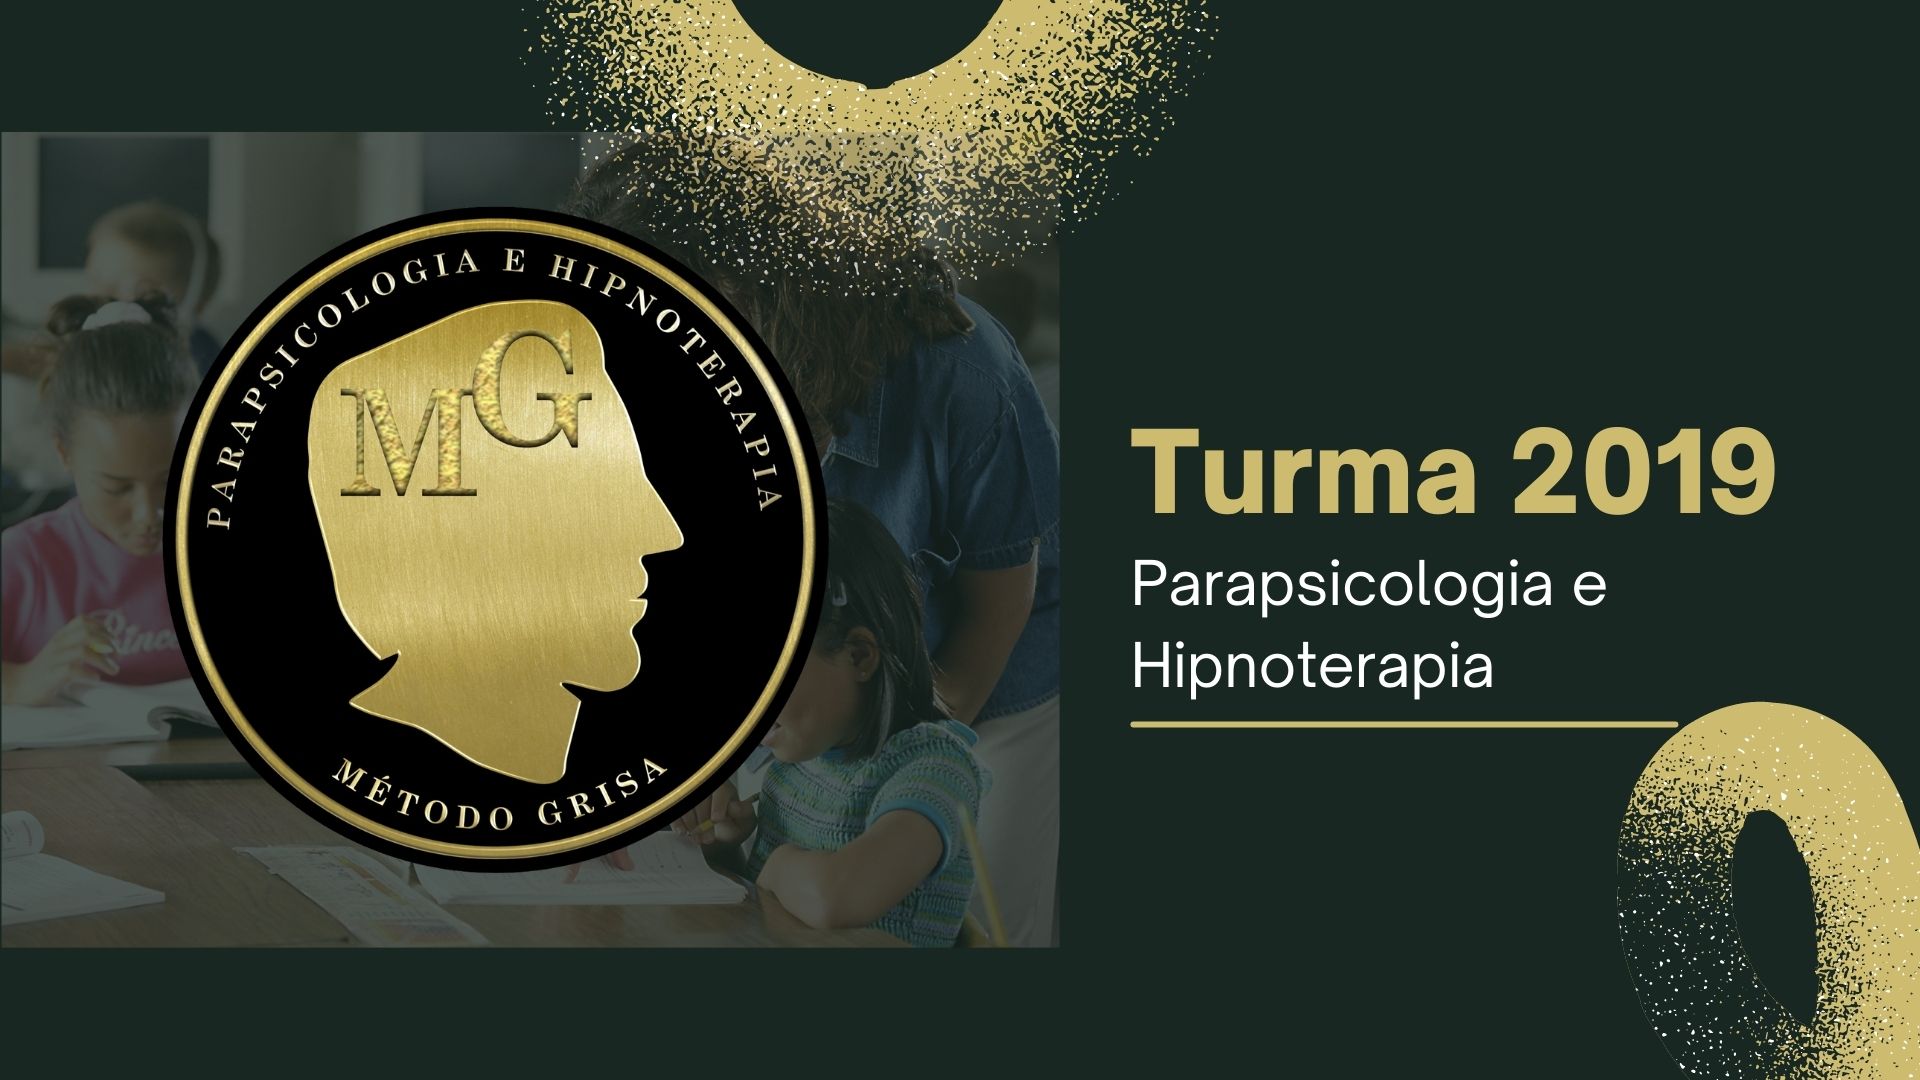 Parapsicologia e Hipnoterapia Turma 2019